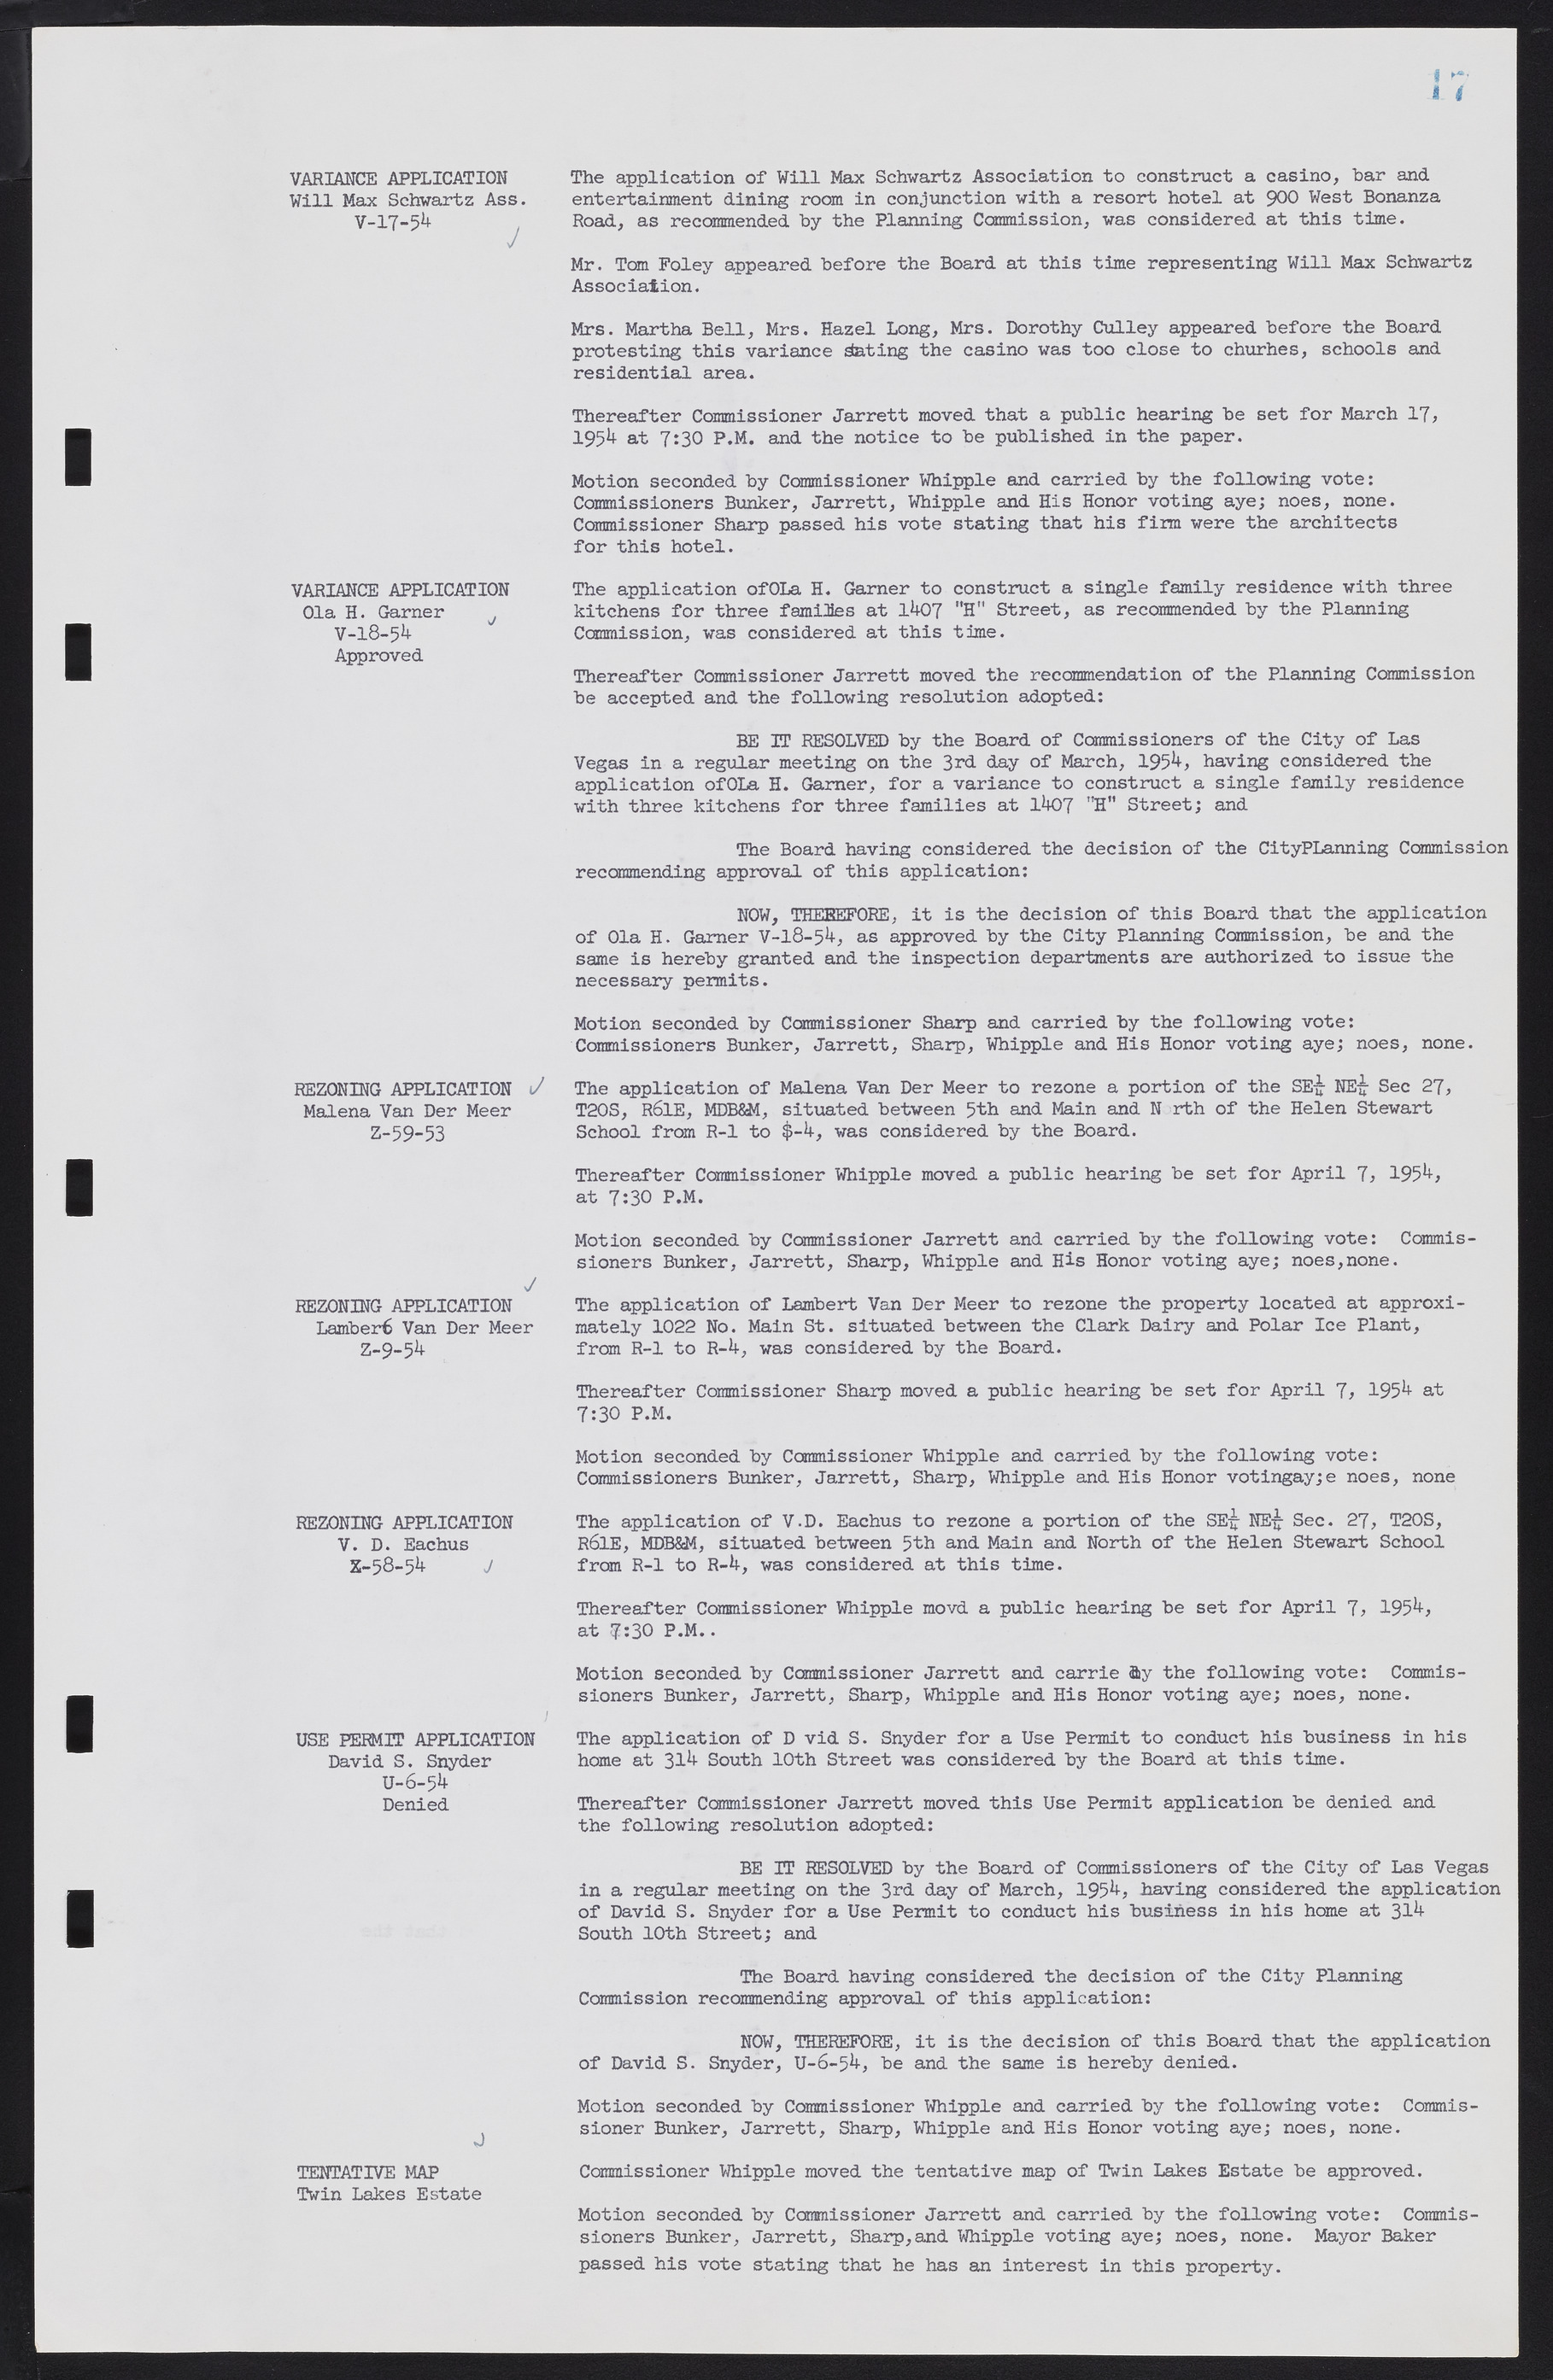 Las Vegas City Commission Minutes, February 17, 1954 to September 21, 1955, lvc000009-21